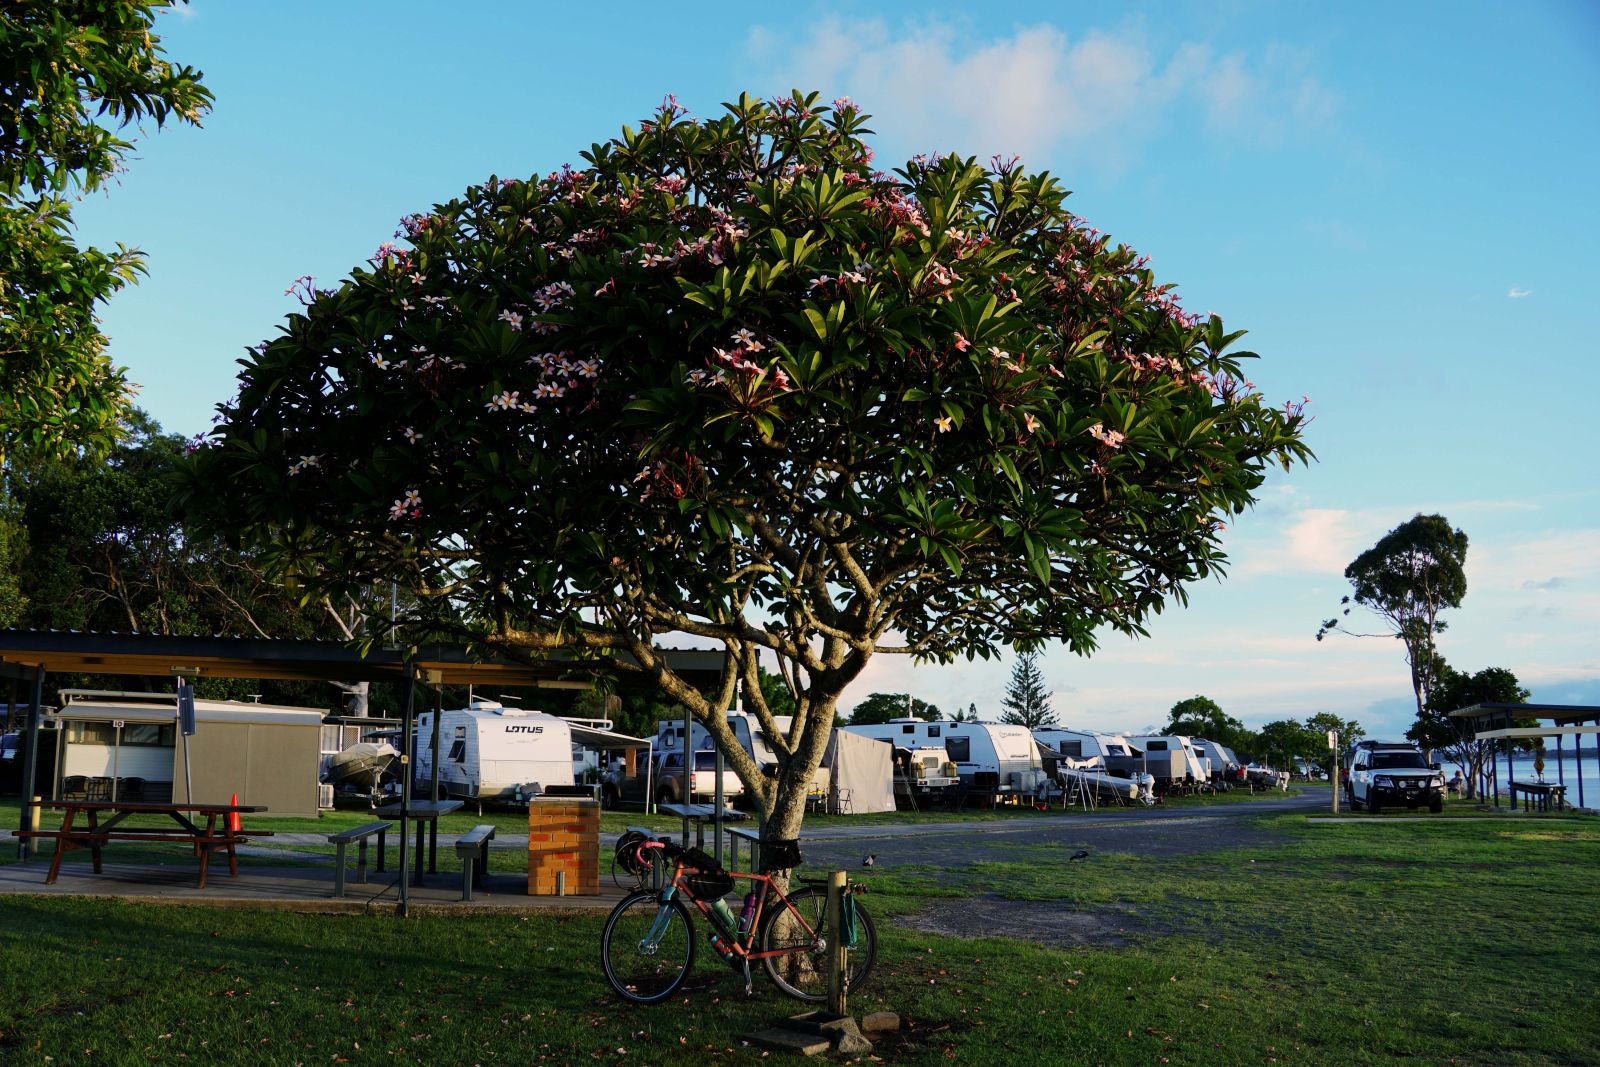 James' bike under a frangipani tree